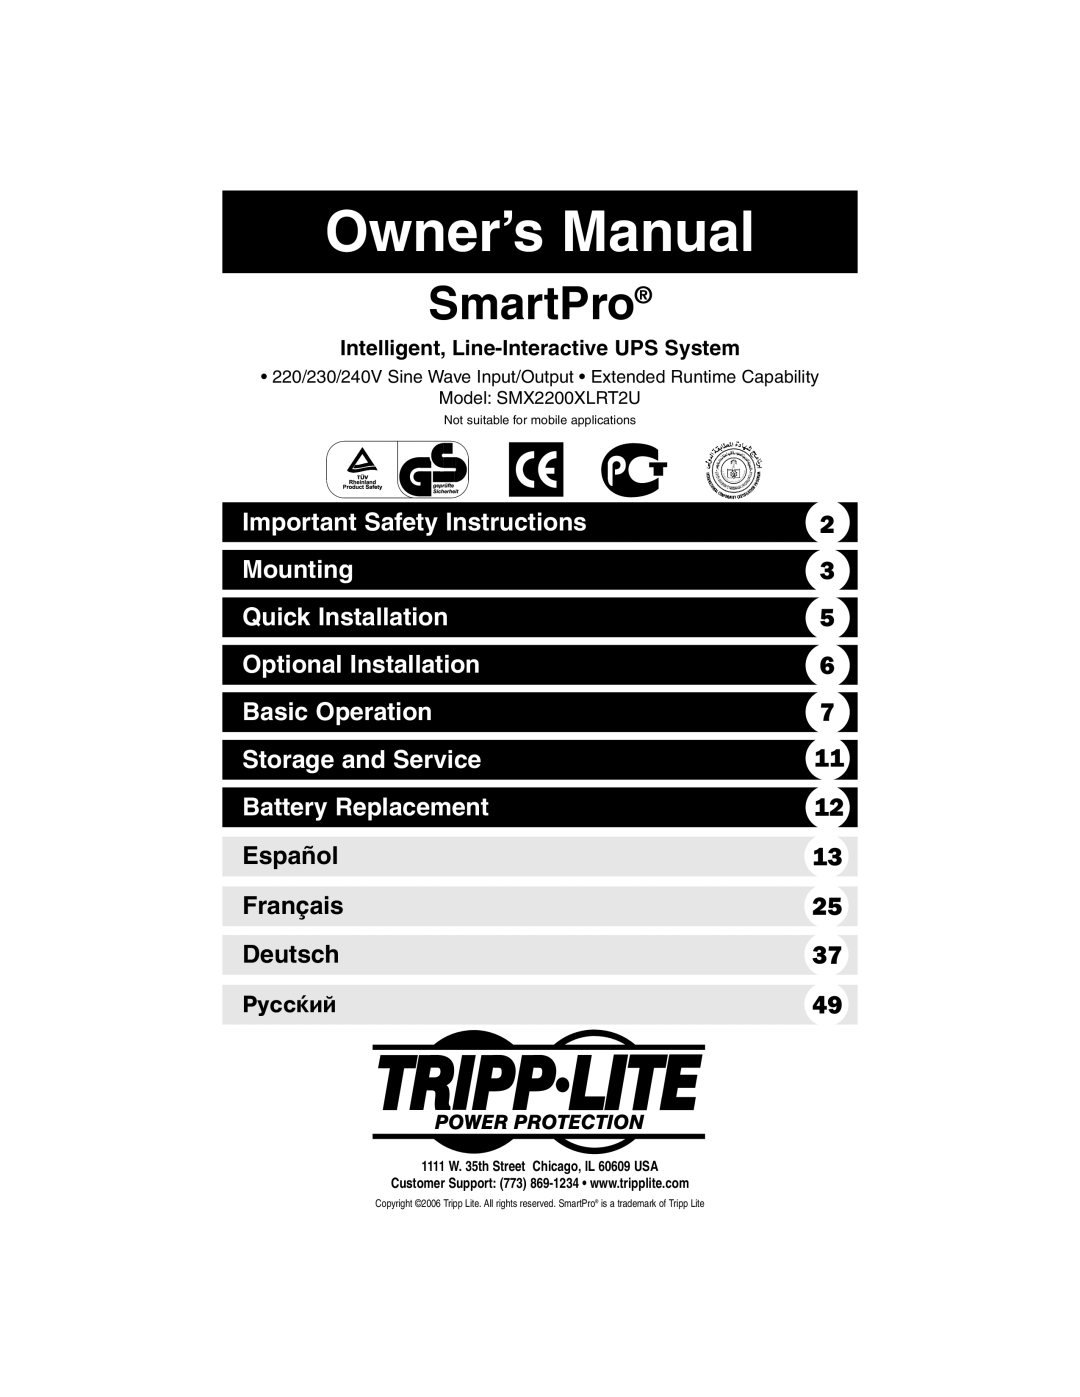 Tripp Lite SMX2200XLRT2U owner manual Owner’s Manual, SmartPro, Important Safety Instructions, Mounting, Basic Operation 